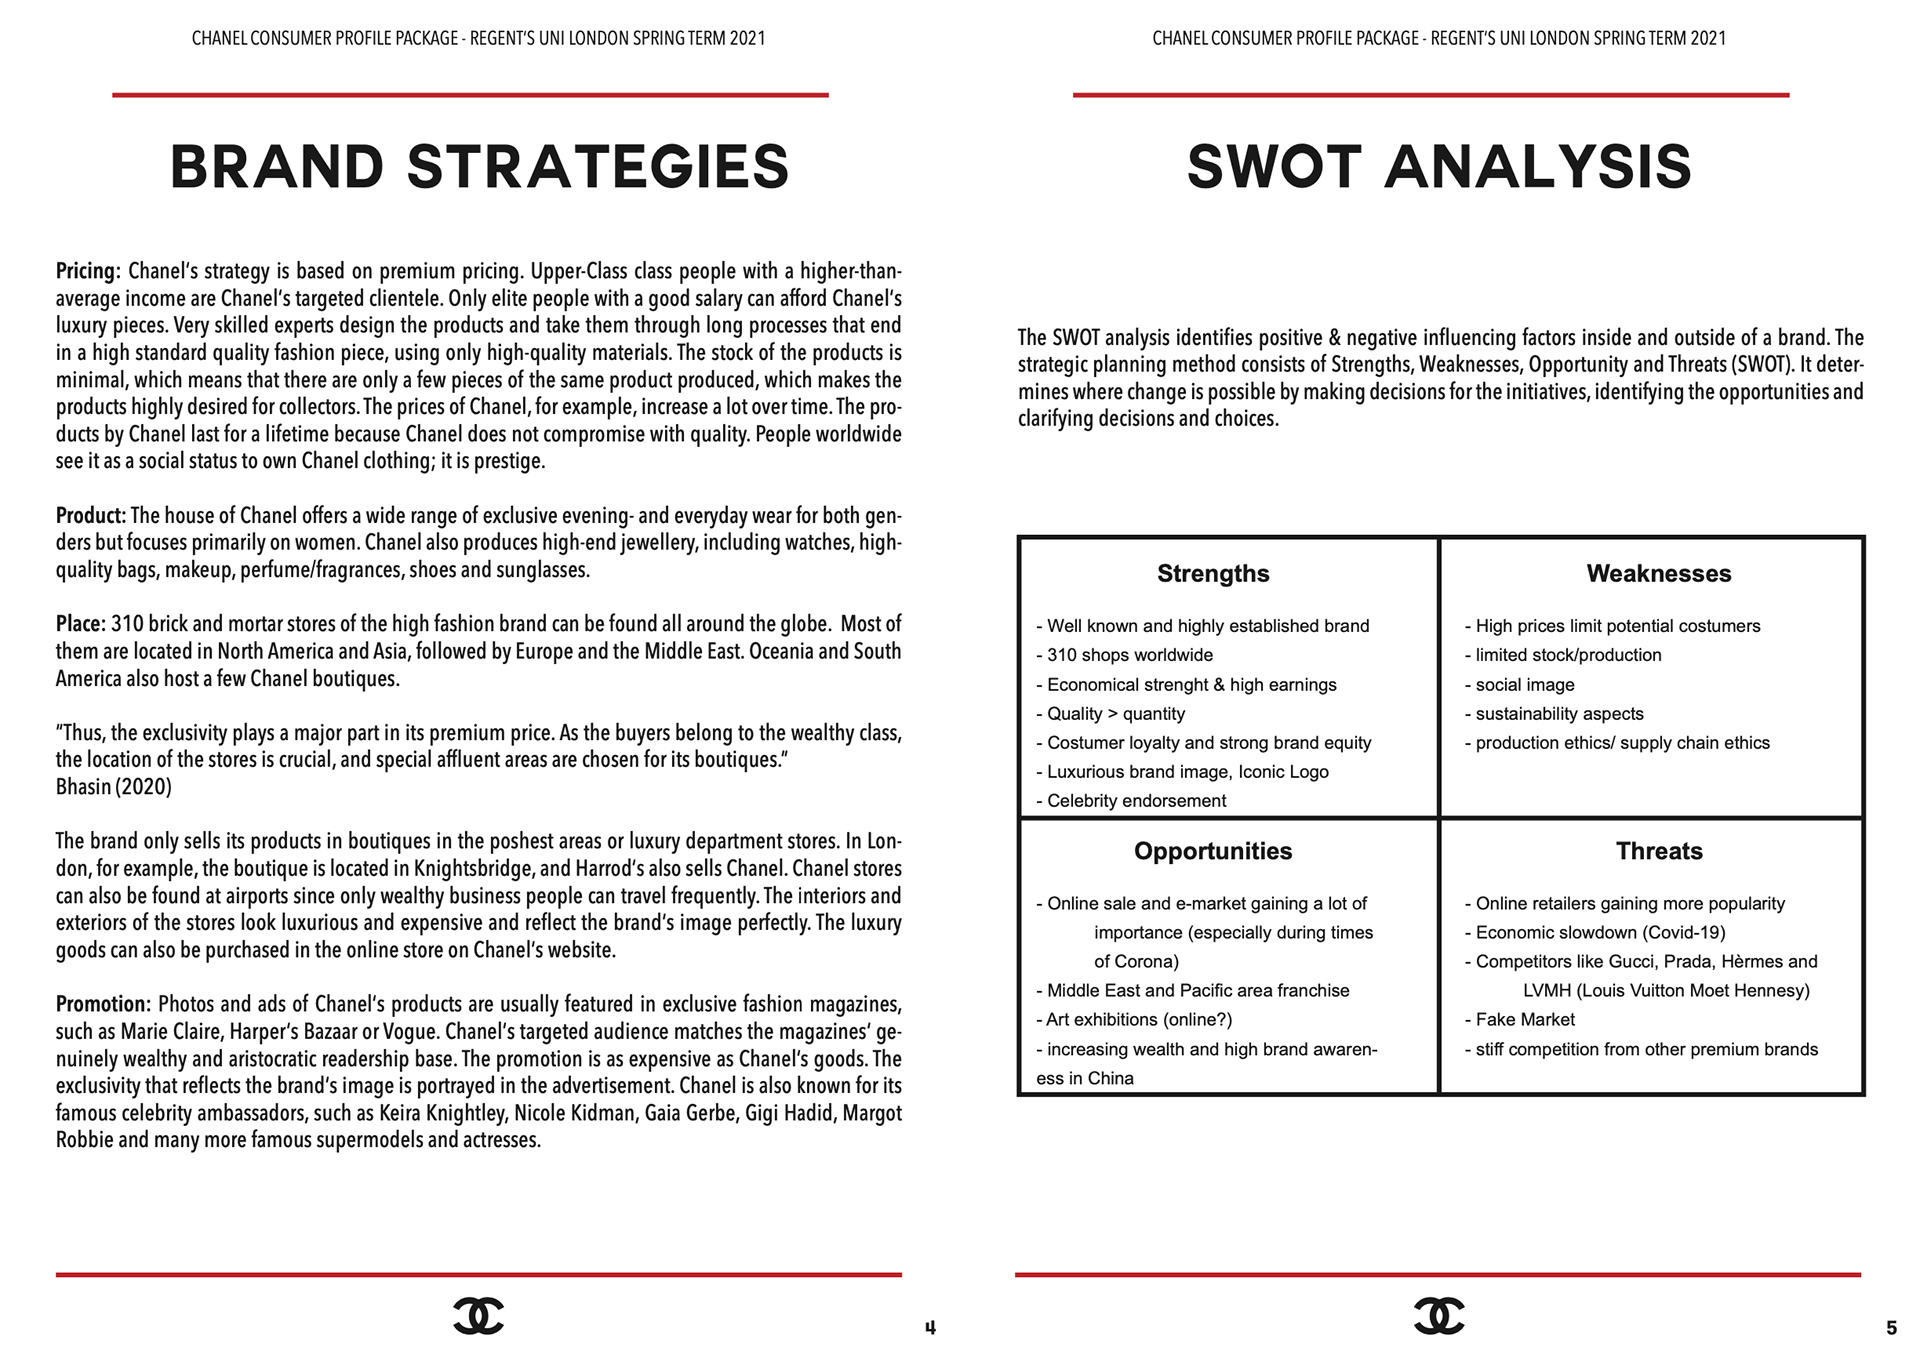 SWOT Analysis of Prada